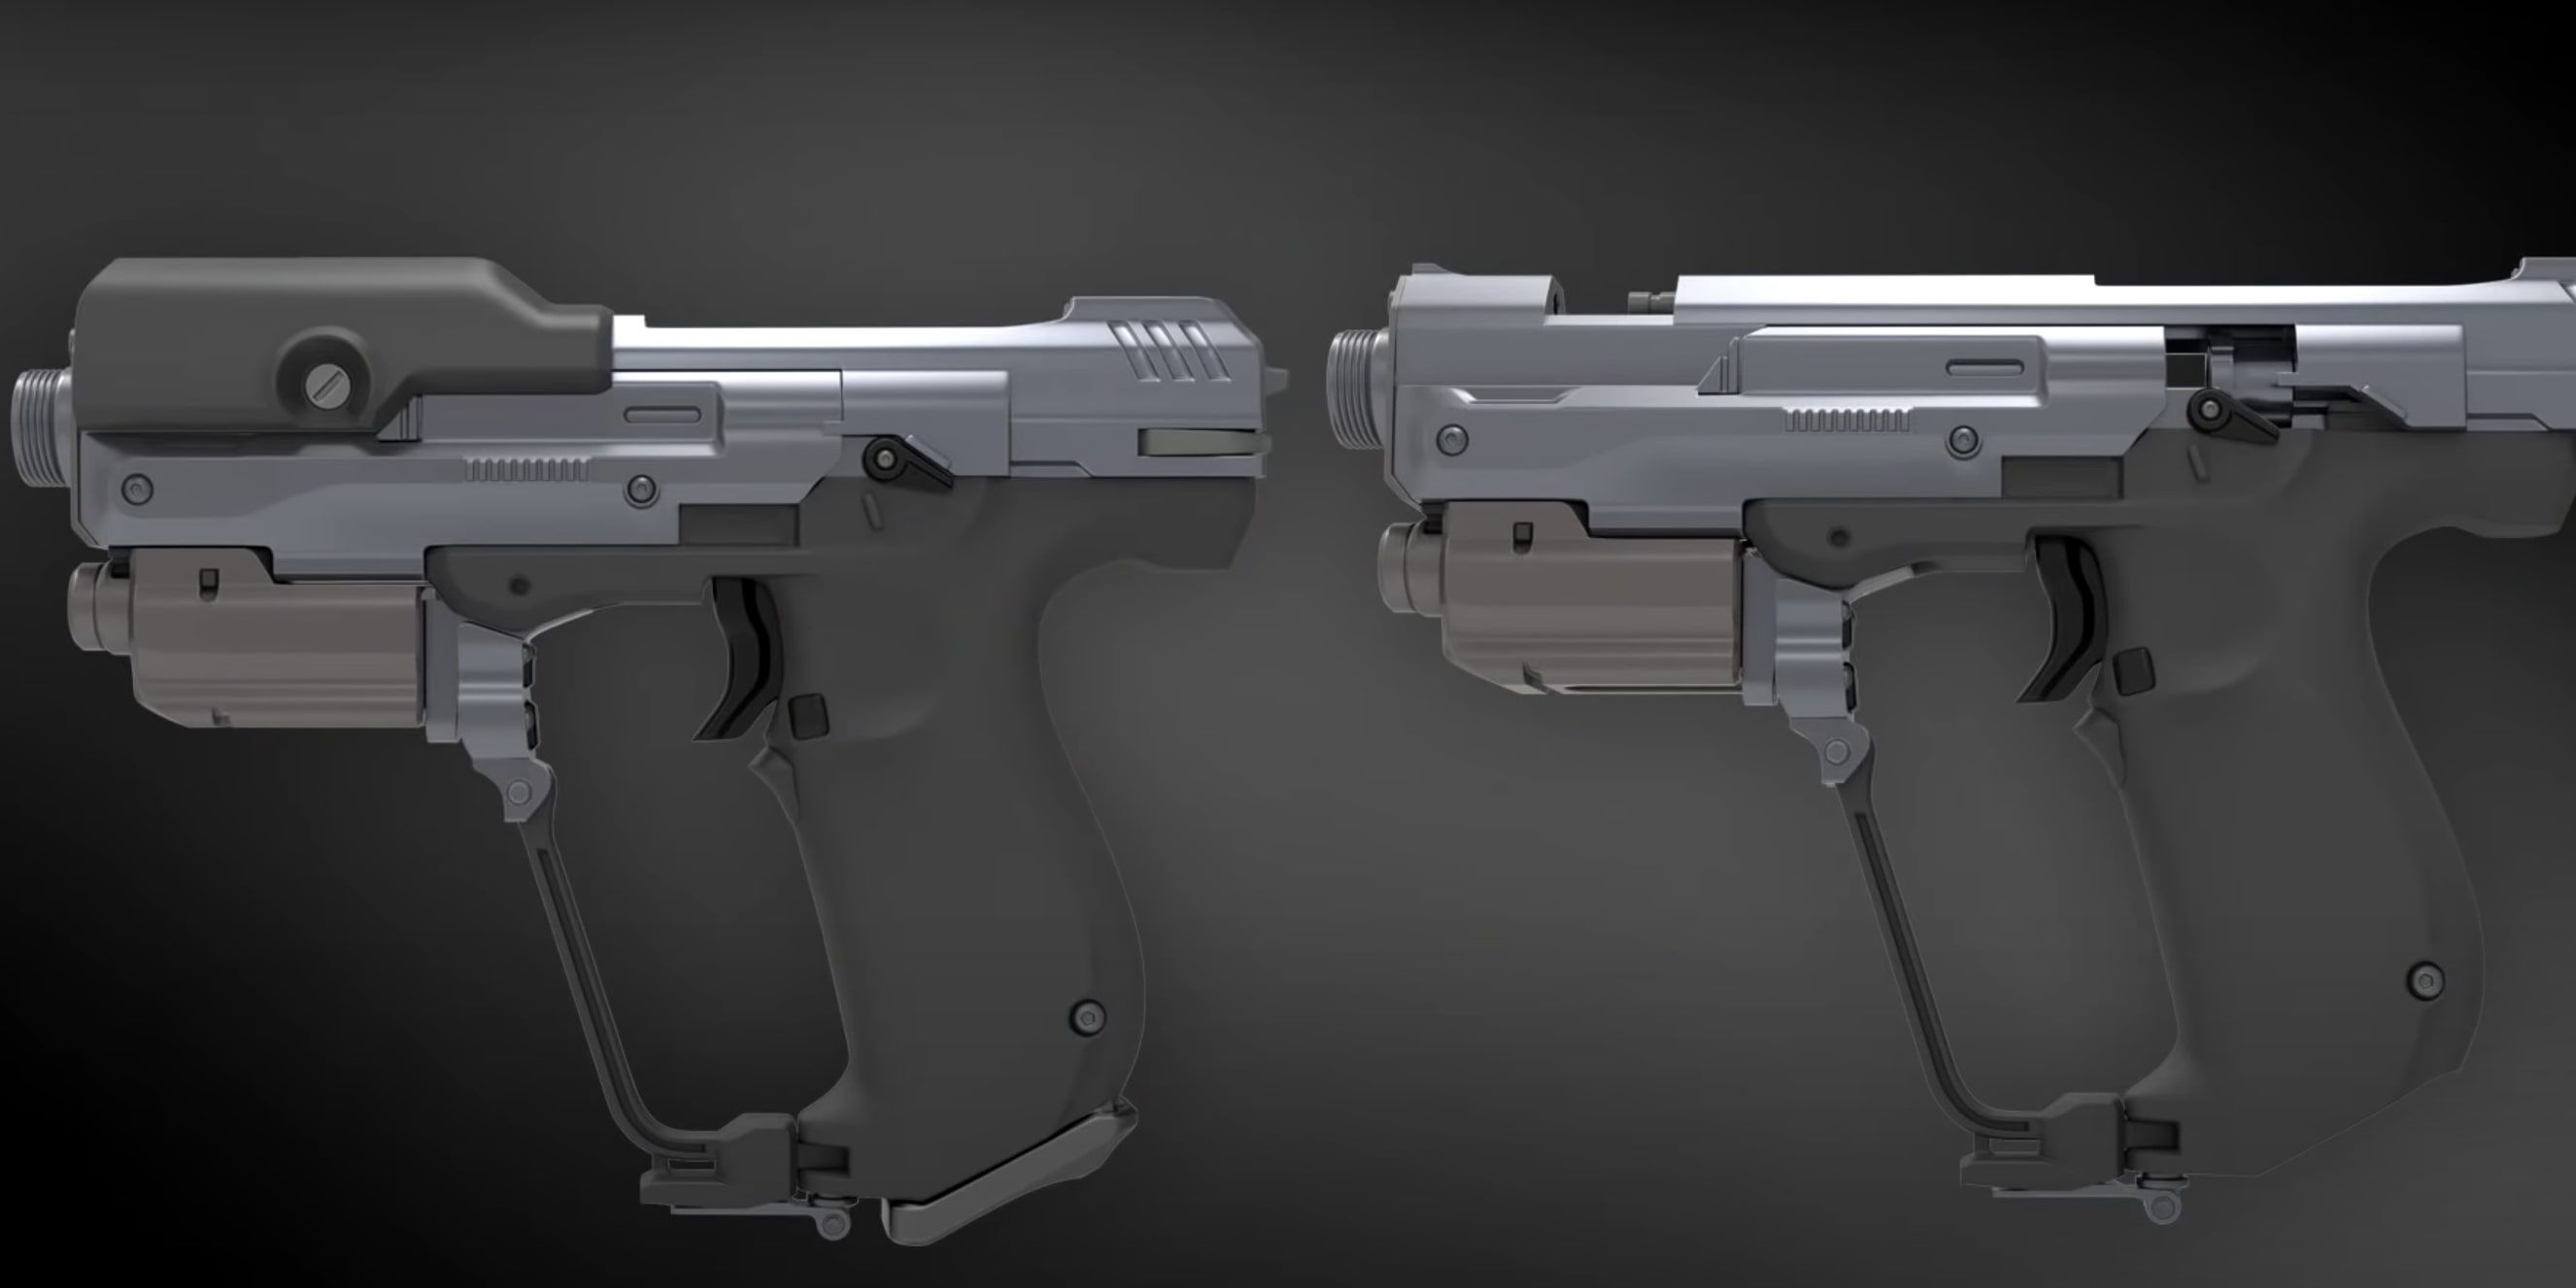 Halo 5: Guardians Pistol Comparison to Halo 4 Design